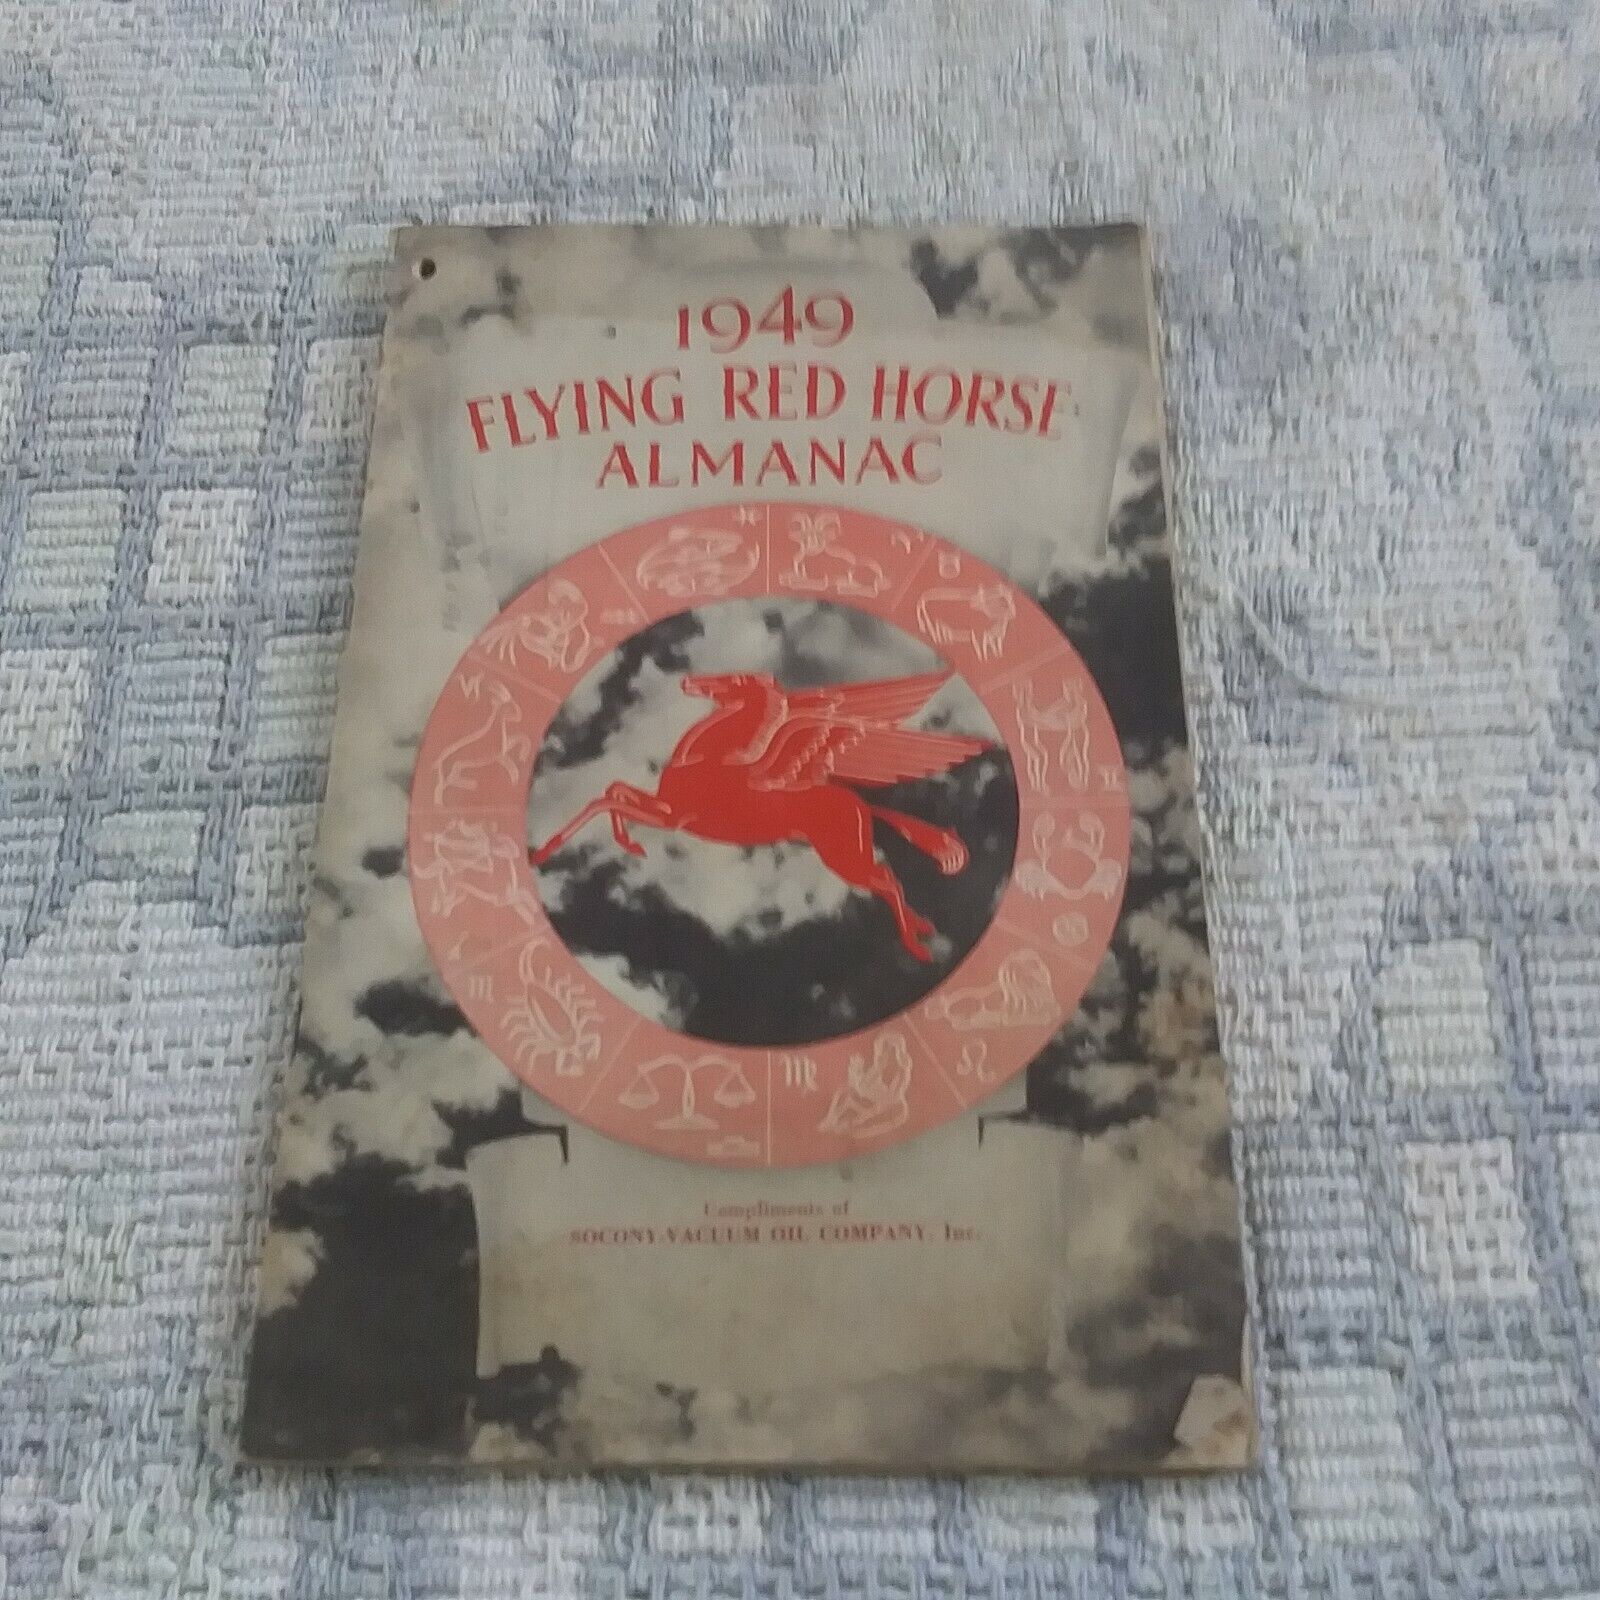 1949 Flying Red Horse Almanac